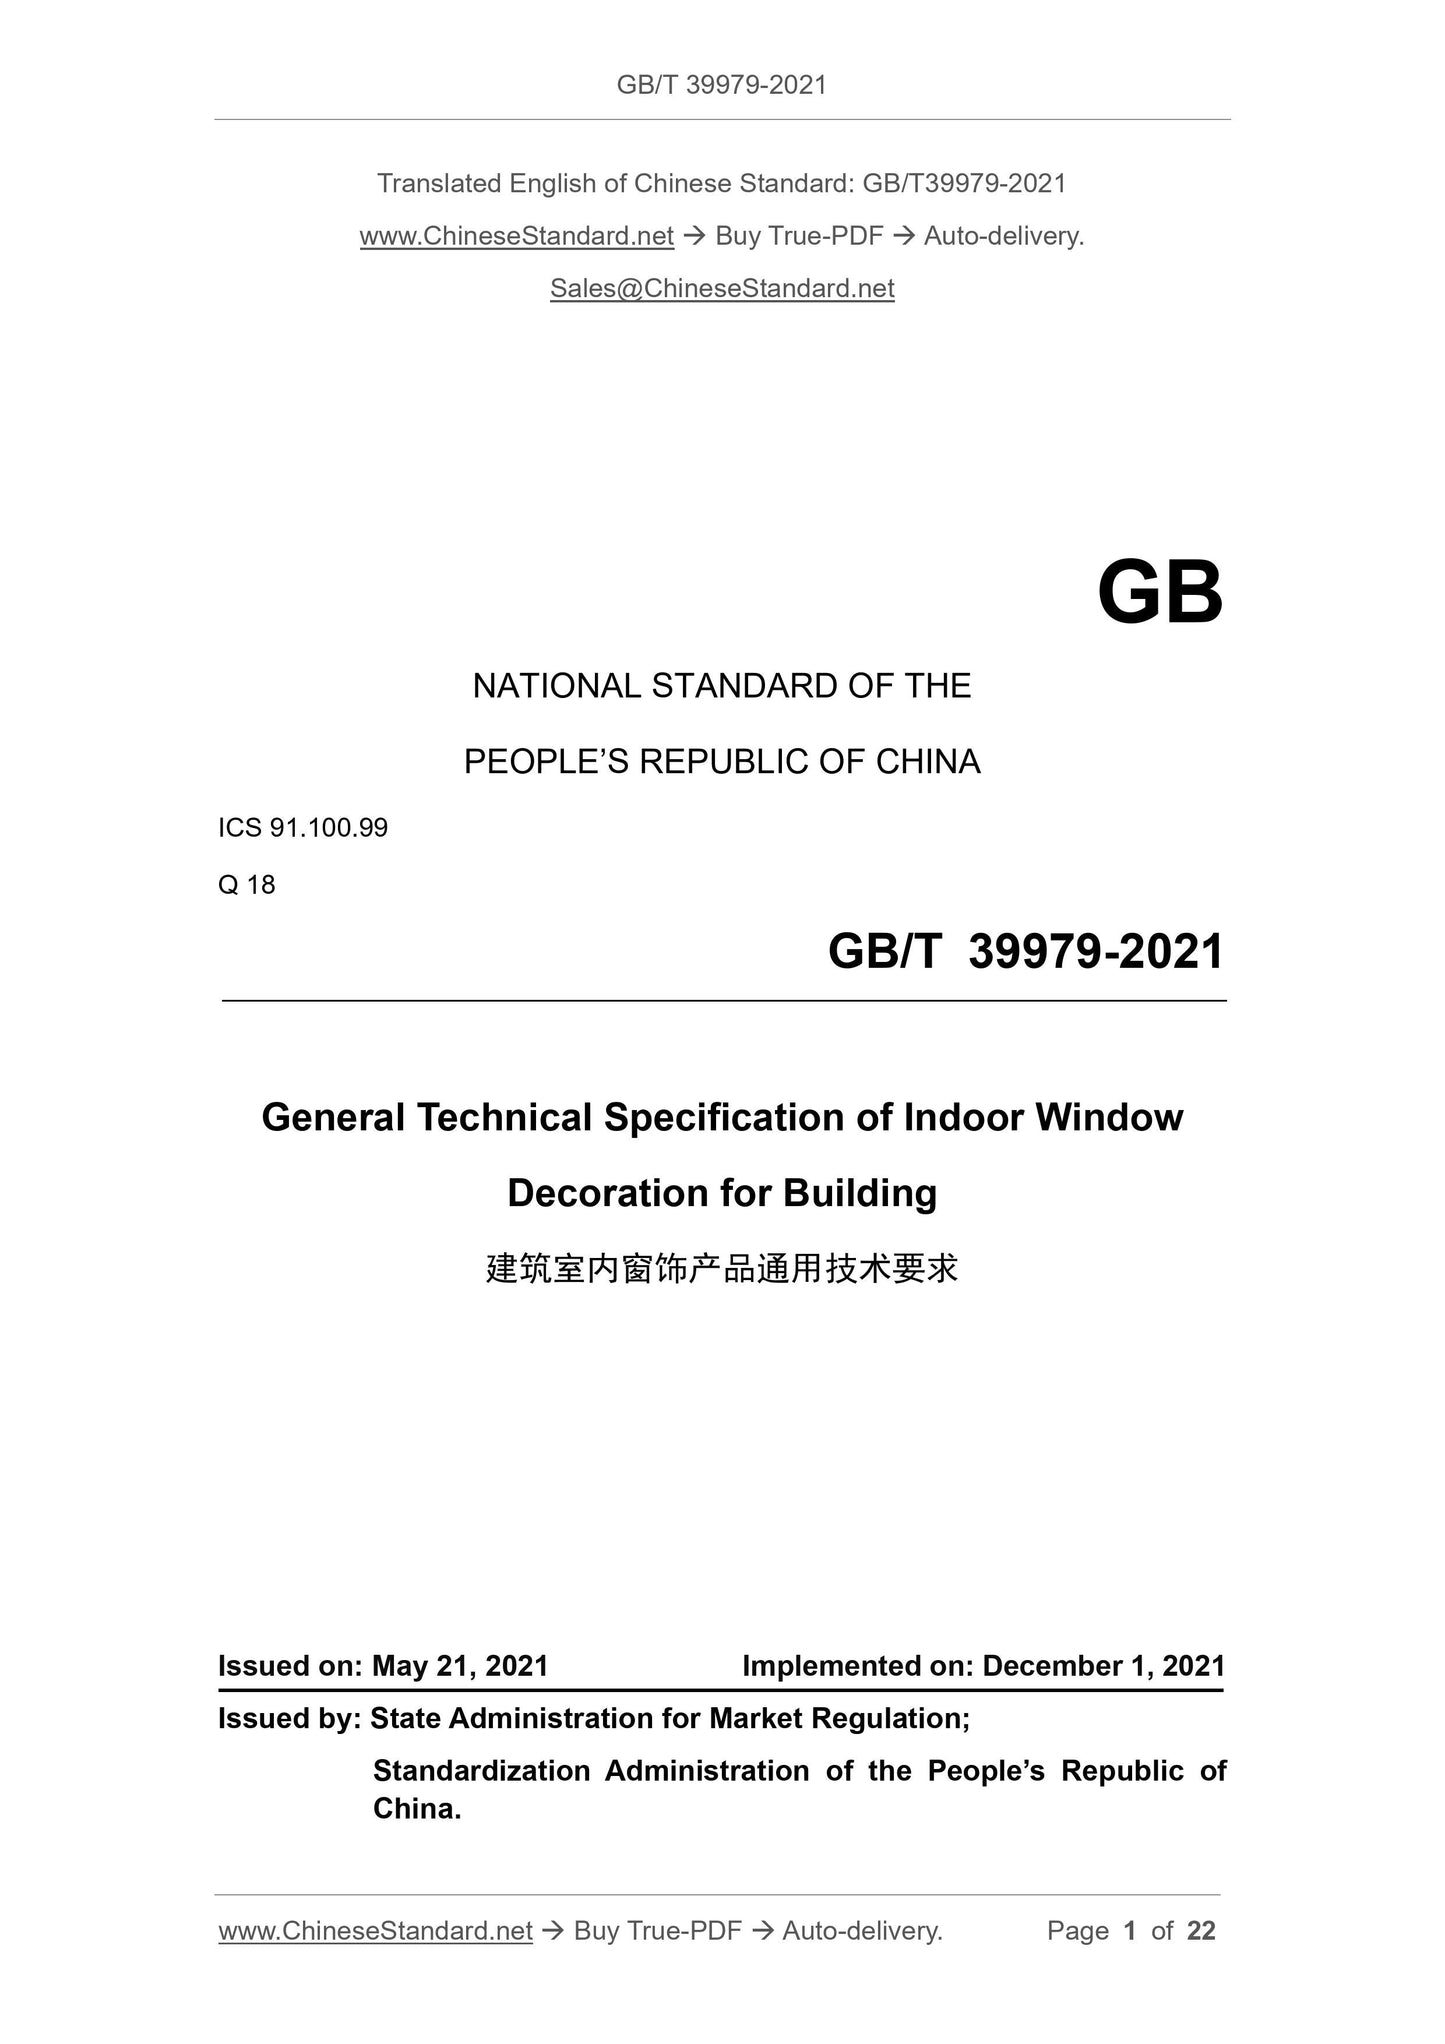 GBT39979-2021 Page 1